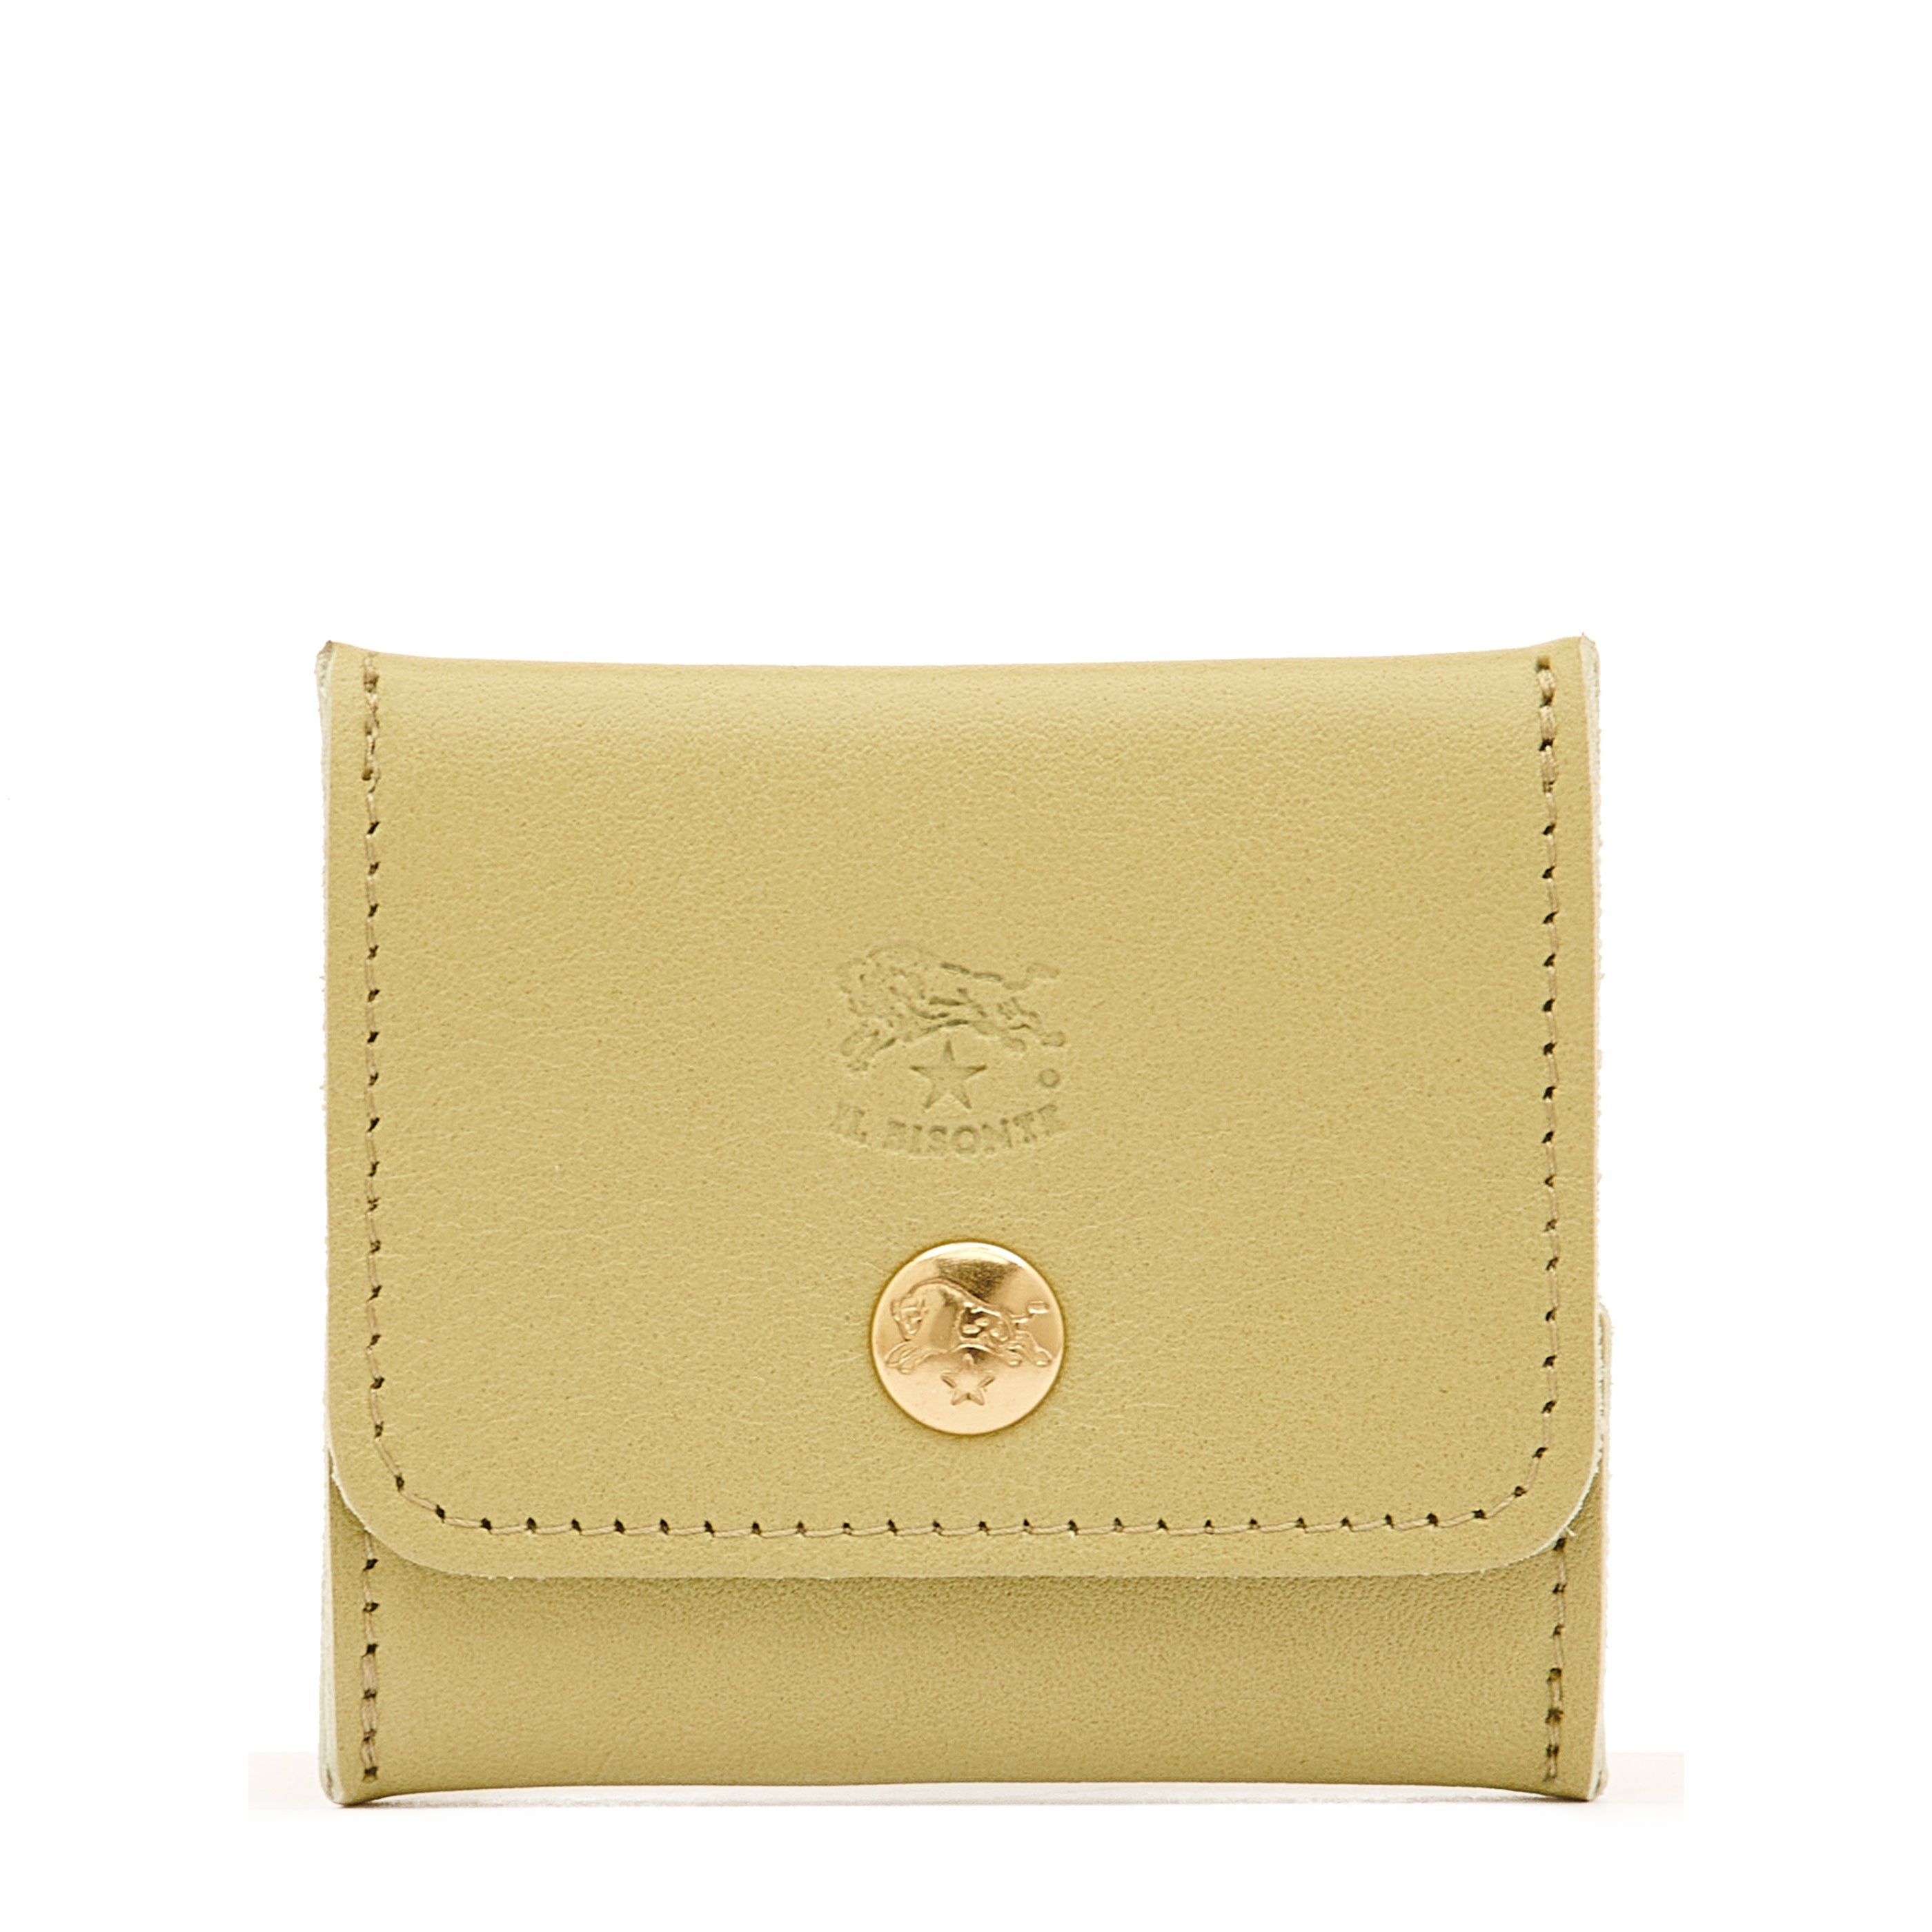 Coin purse in leather color pistachio